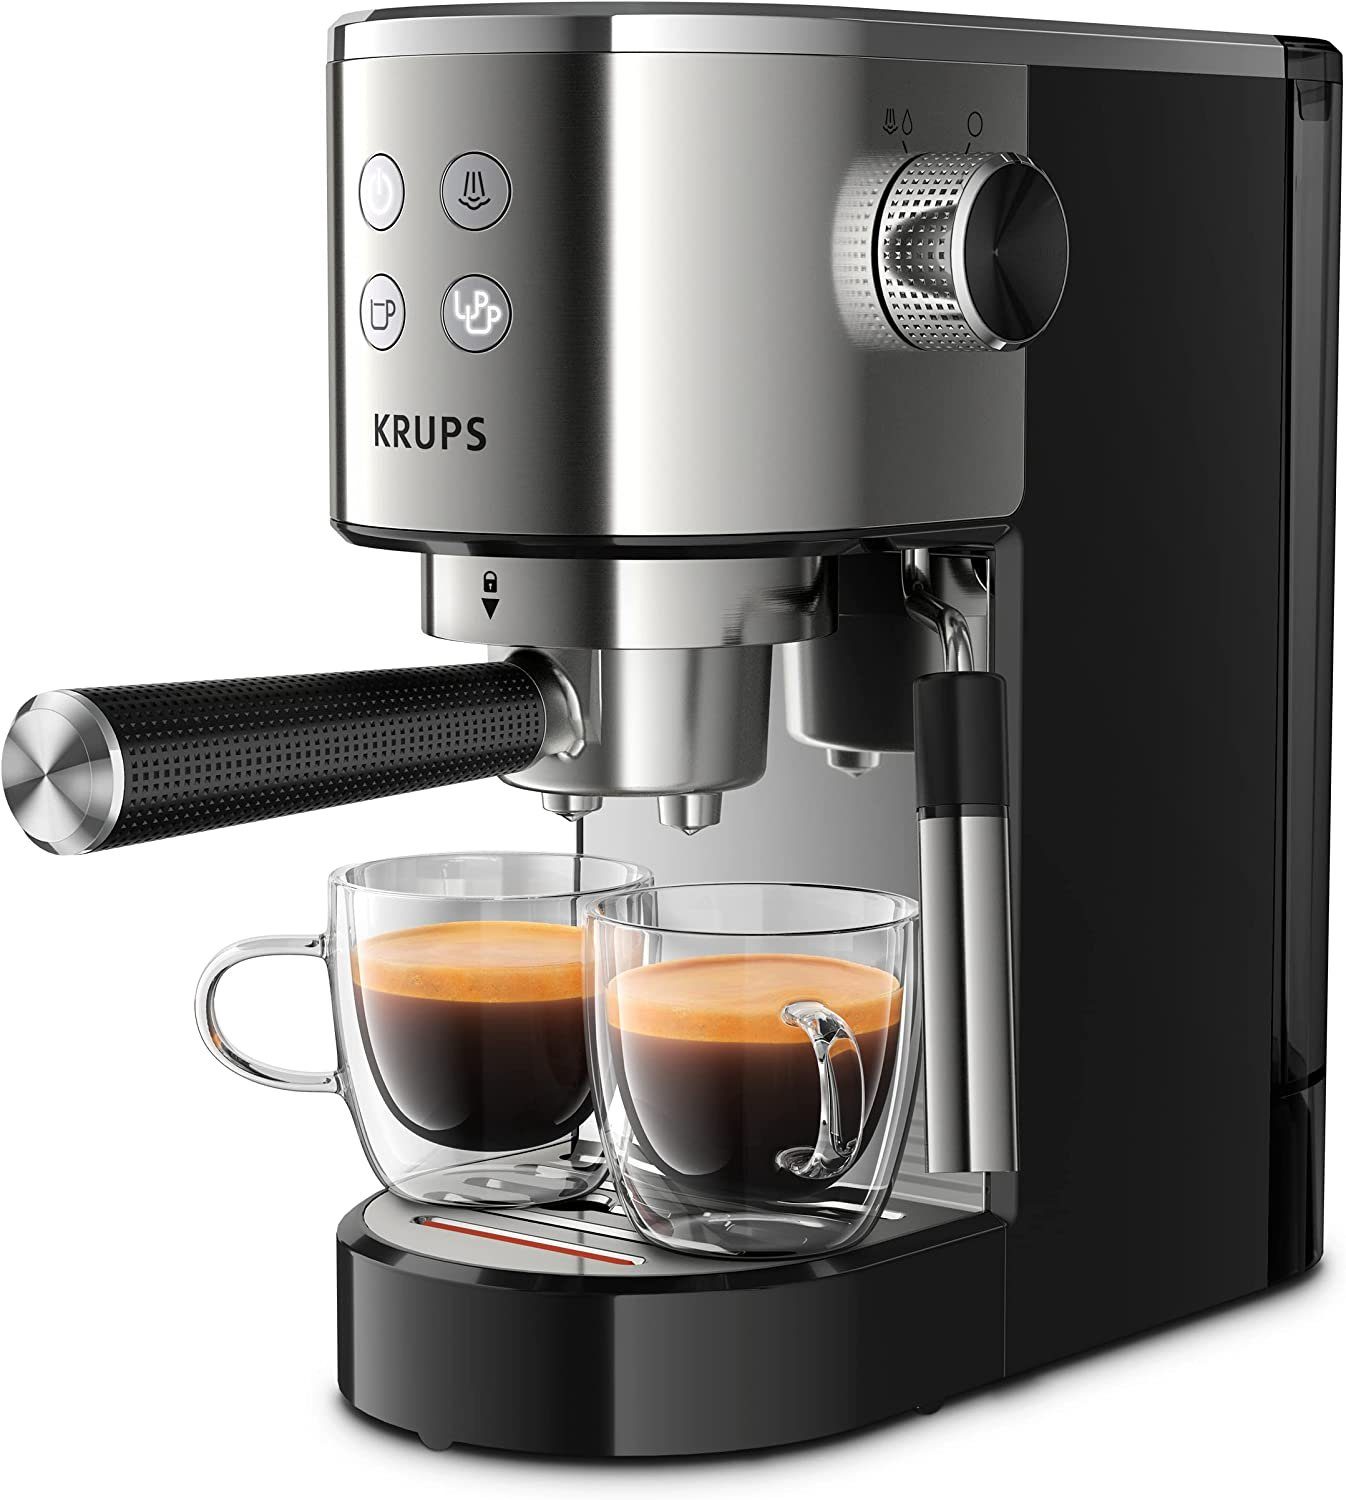 Milchschaumdüse Kaffeekanne, automatischer Edelstahl, geeignet 1l Filtereinsatz Espressomaschine ESE 15 + Kaffeepads Abschaltung, Tamper, Krups XP442C, Bar